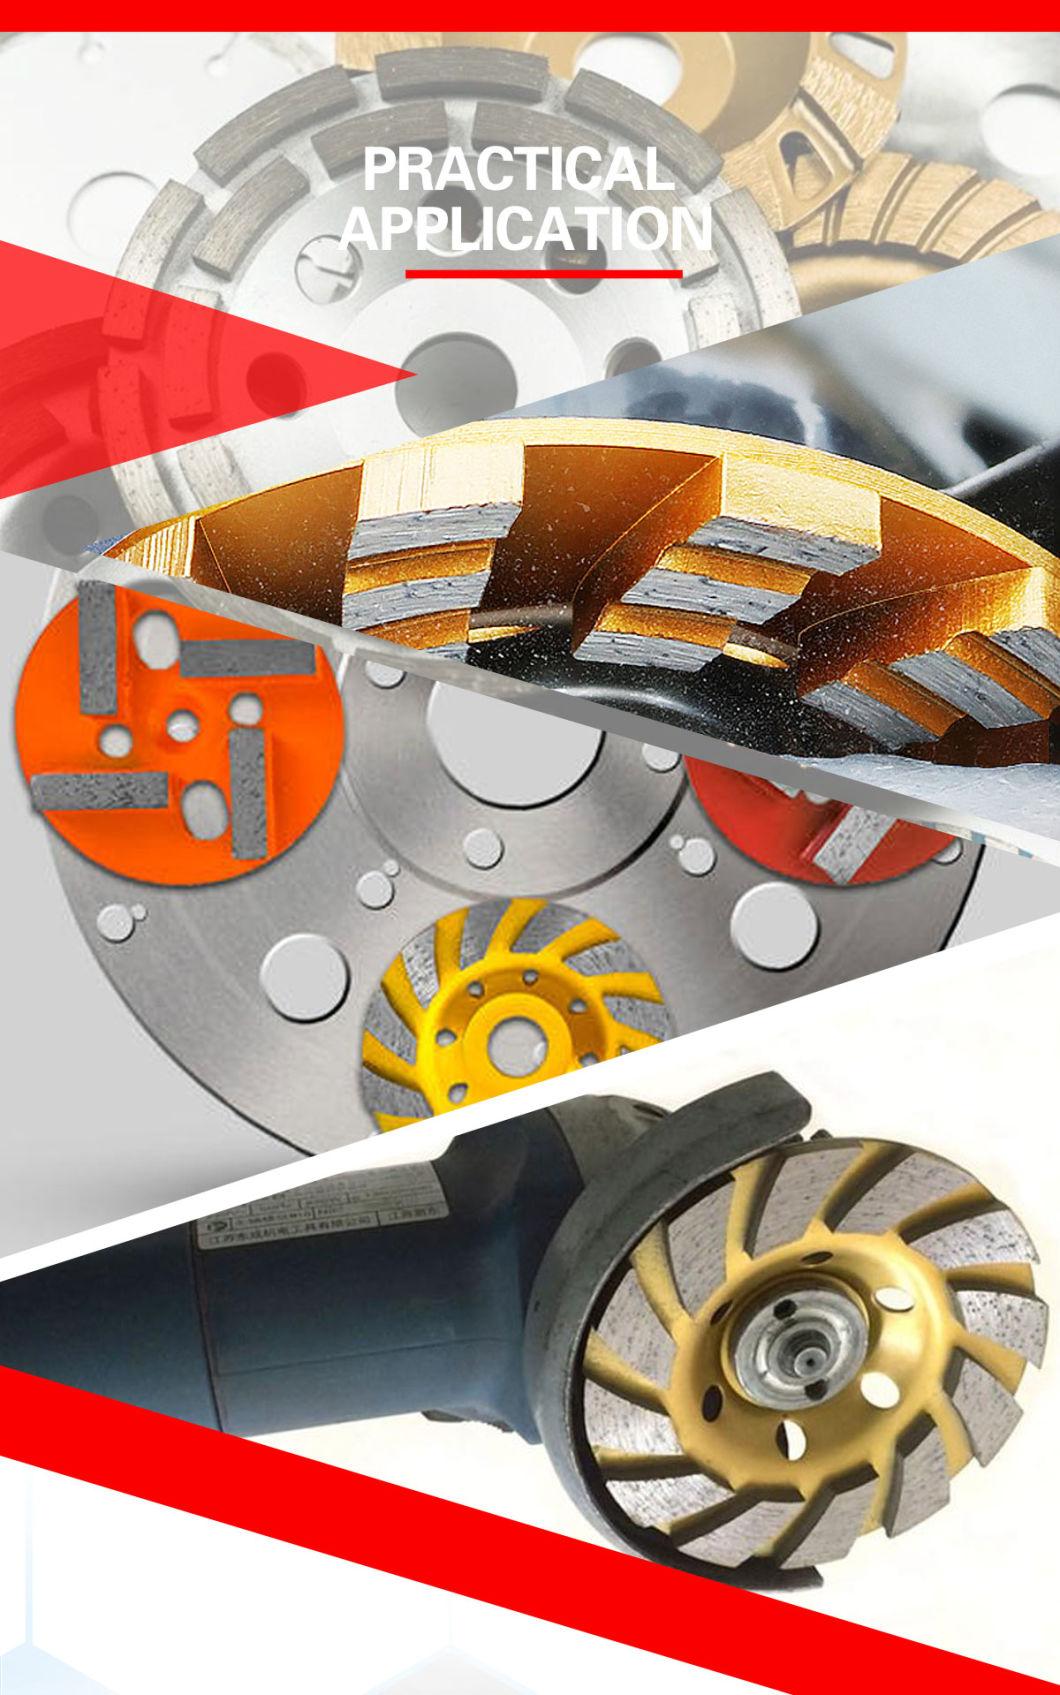 Diamond CNC Stubbing Wheel Diamond Grinding Wheel for Granite Grinding Tools